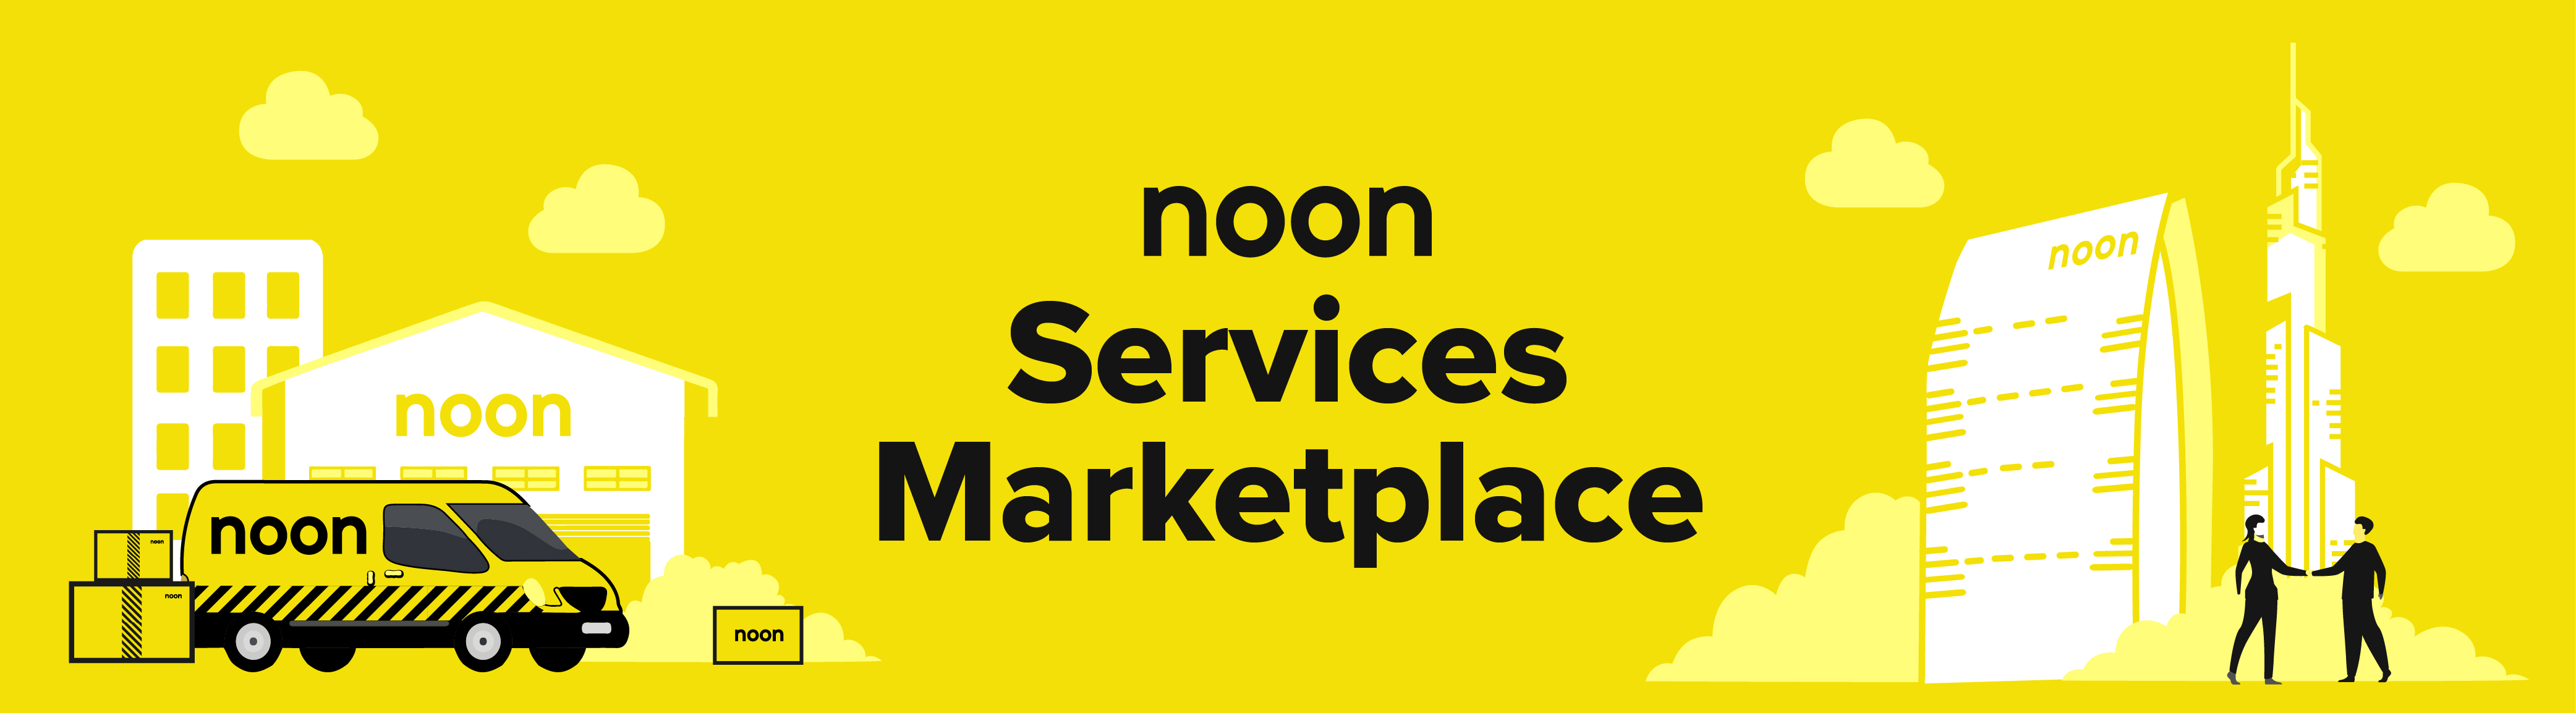 seller_service_marketplace_banner-01.jpg